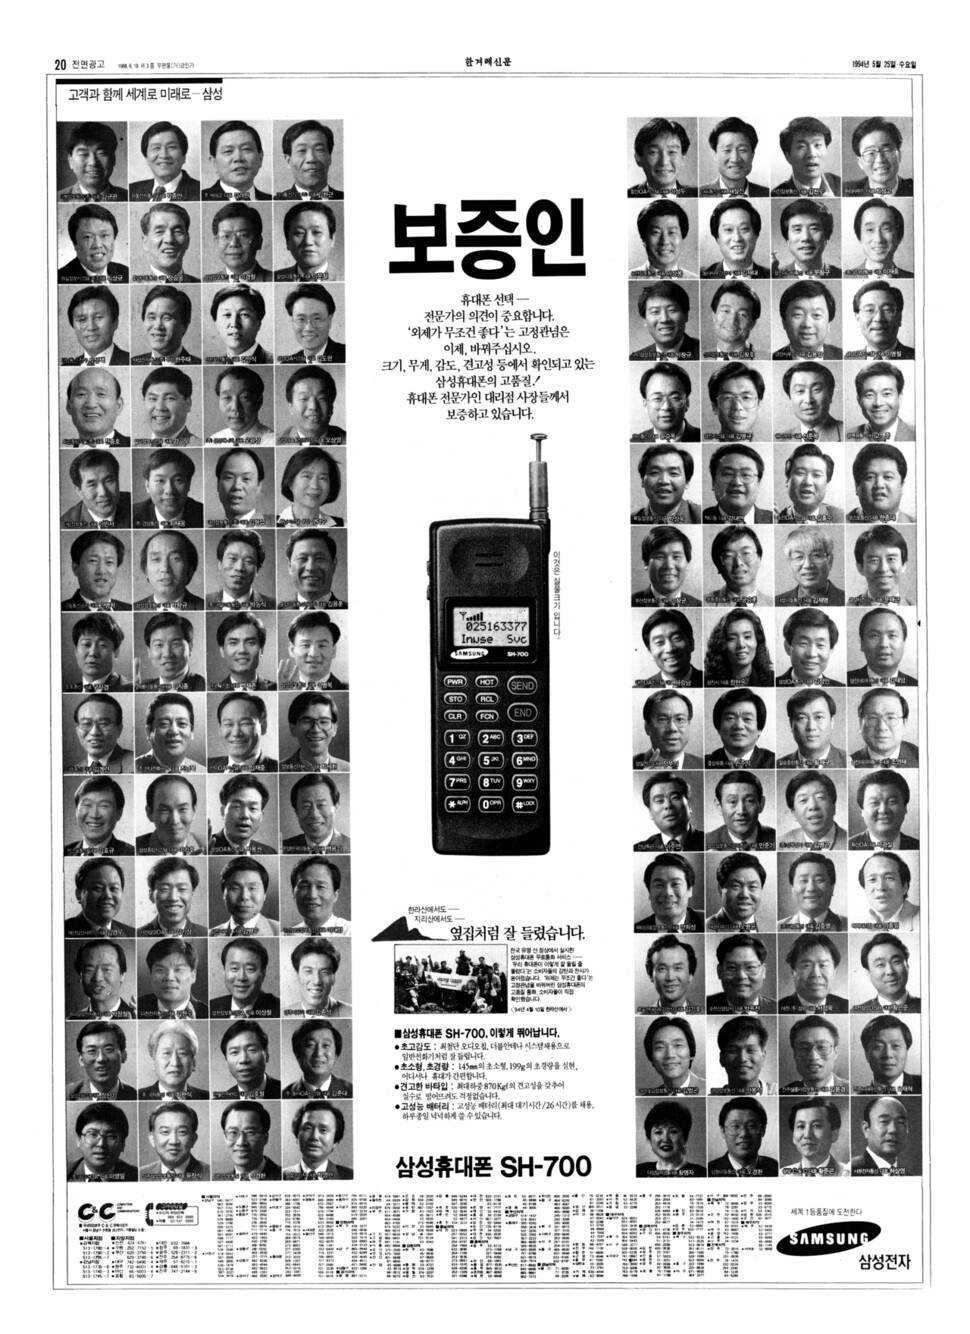 &lt;한겨레&gt; 1994년 5월25일치 20면. 독특했던 삼성 휴대폰 SH-700 광고. 휴대폰 대리점 사장님들 얼굴을 모았다. 당시 삼성전자는 무조건 모토롤라를 고집하는 소비자들의 마음을 돌릴 방법을 찾고 있었다. 신문에 휴대전화 할부판매 광고도 자주 실렸던 시대다.(※이미지를 누르면 크게 보실수 있습니다)